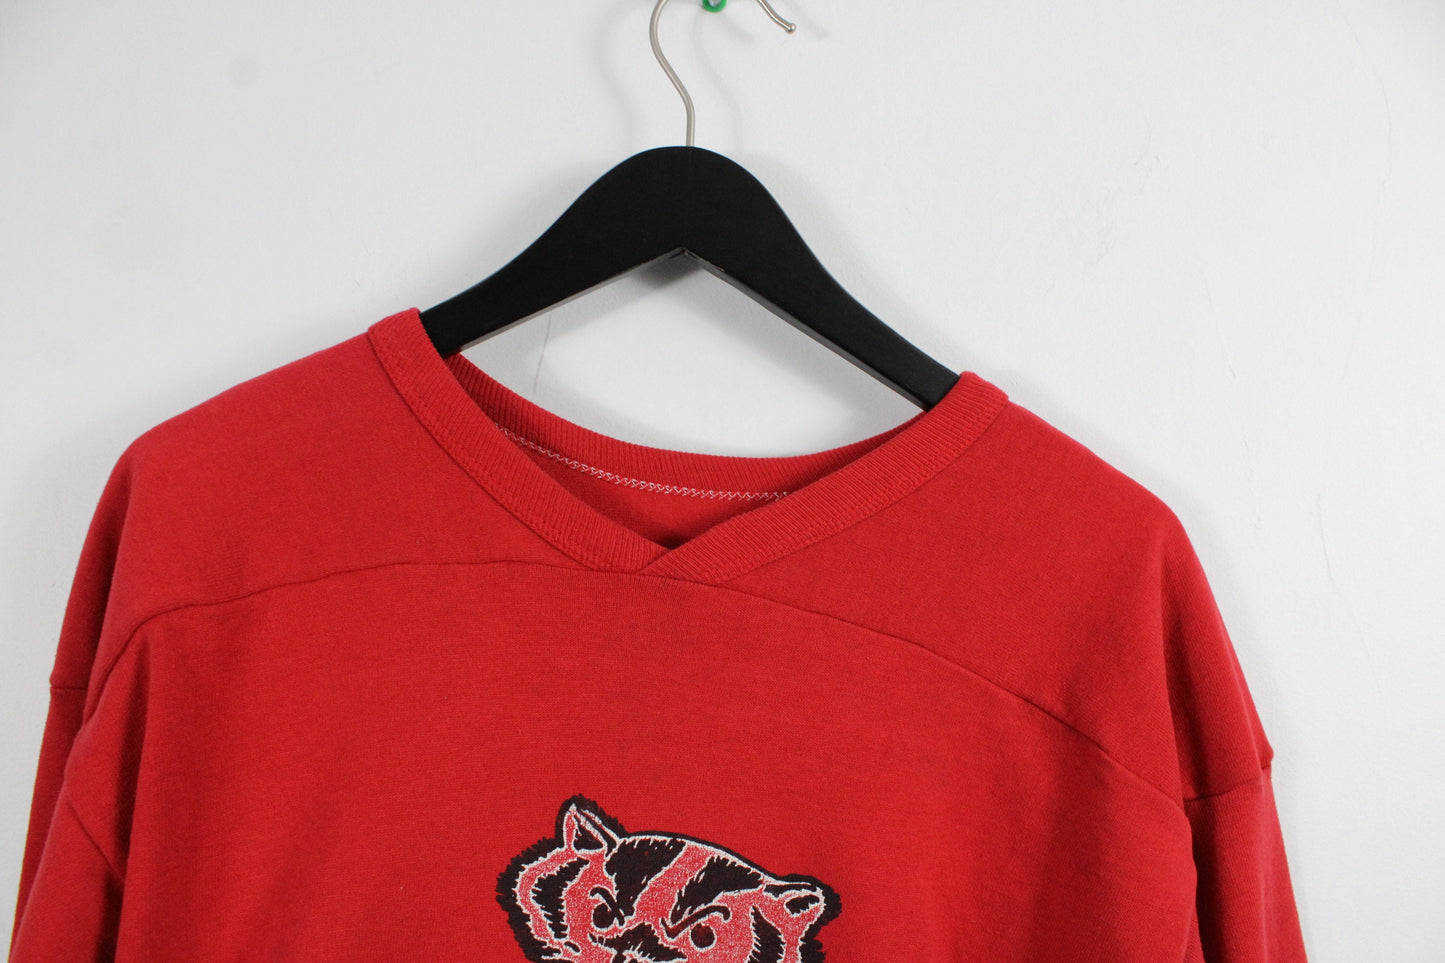 NCAA Jersey-Shirt / Vintage Wisconsin State University Badgers / 90s Sports Team Uniform / Streetwear